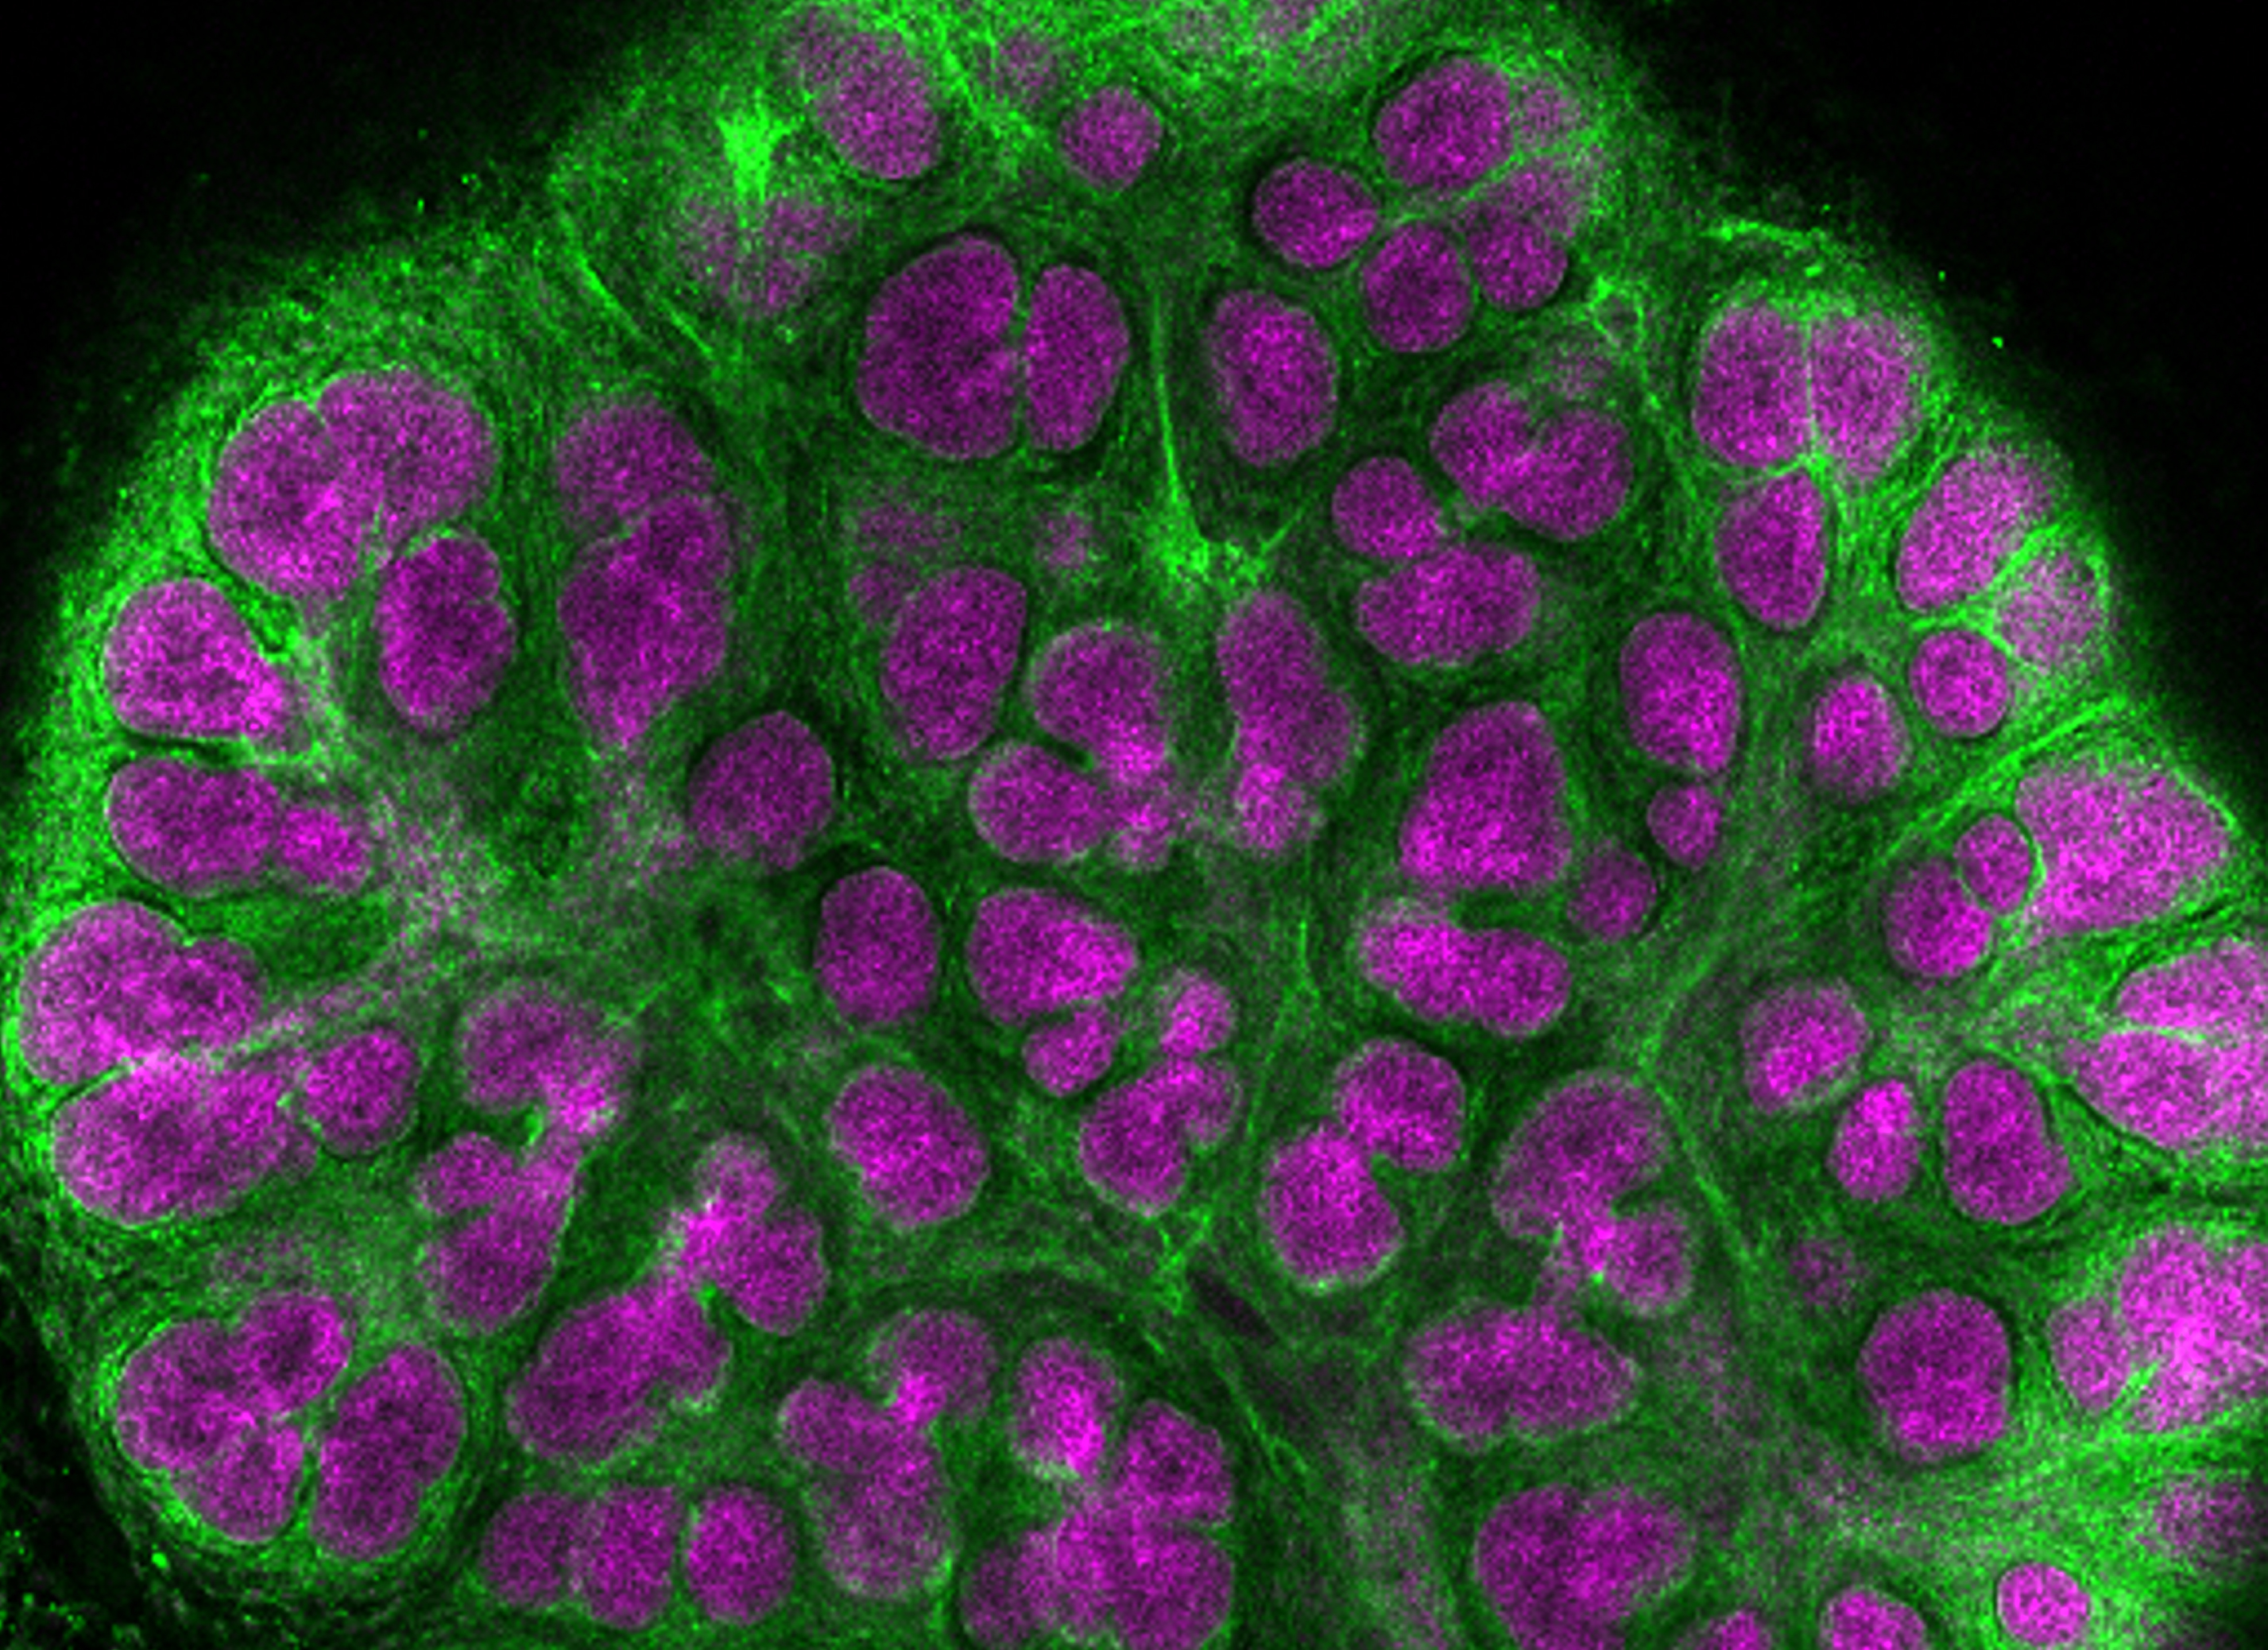 Embryonic mouse salivary gland immunofluorescence: magenta = E-cadherin and green = fibronectin.